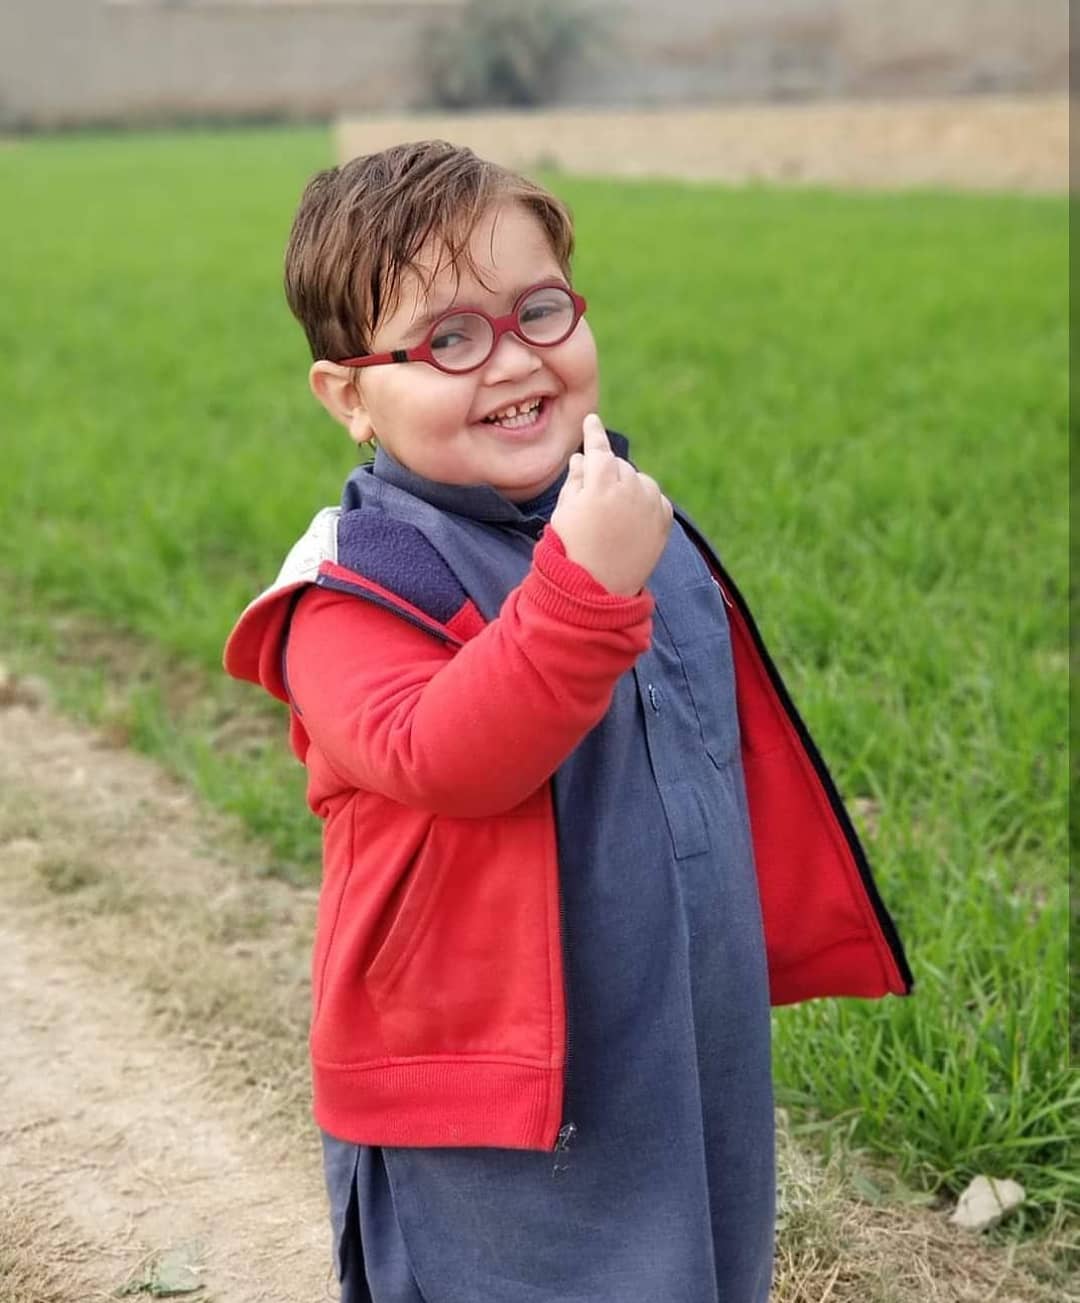 Ahmad Shah Cute Kid HD Photos In Red Jacket